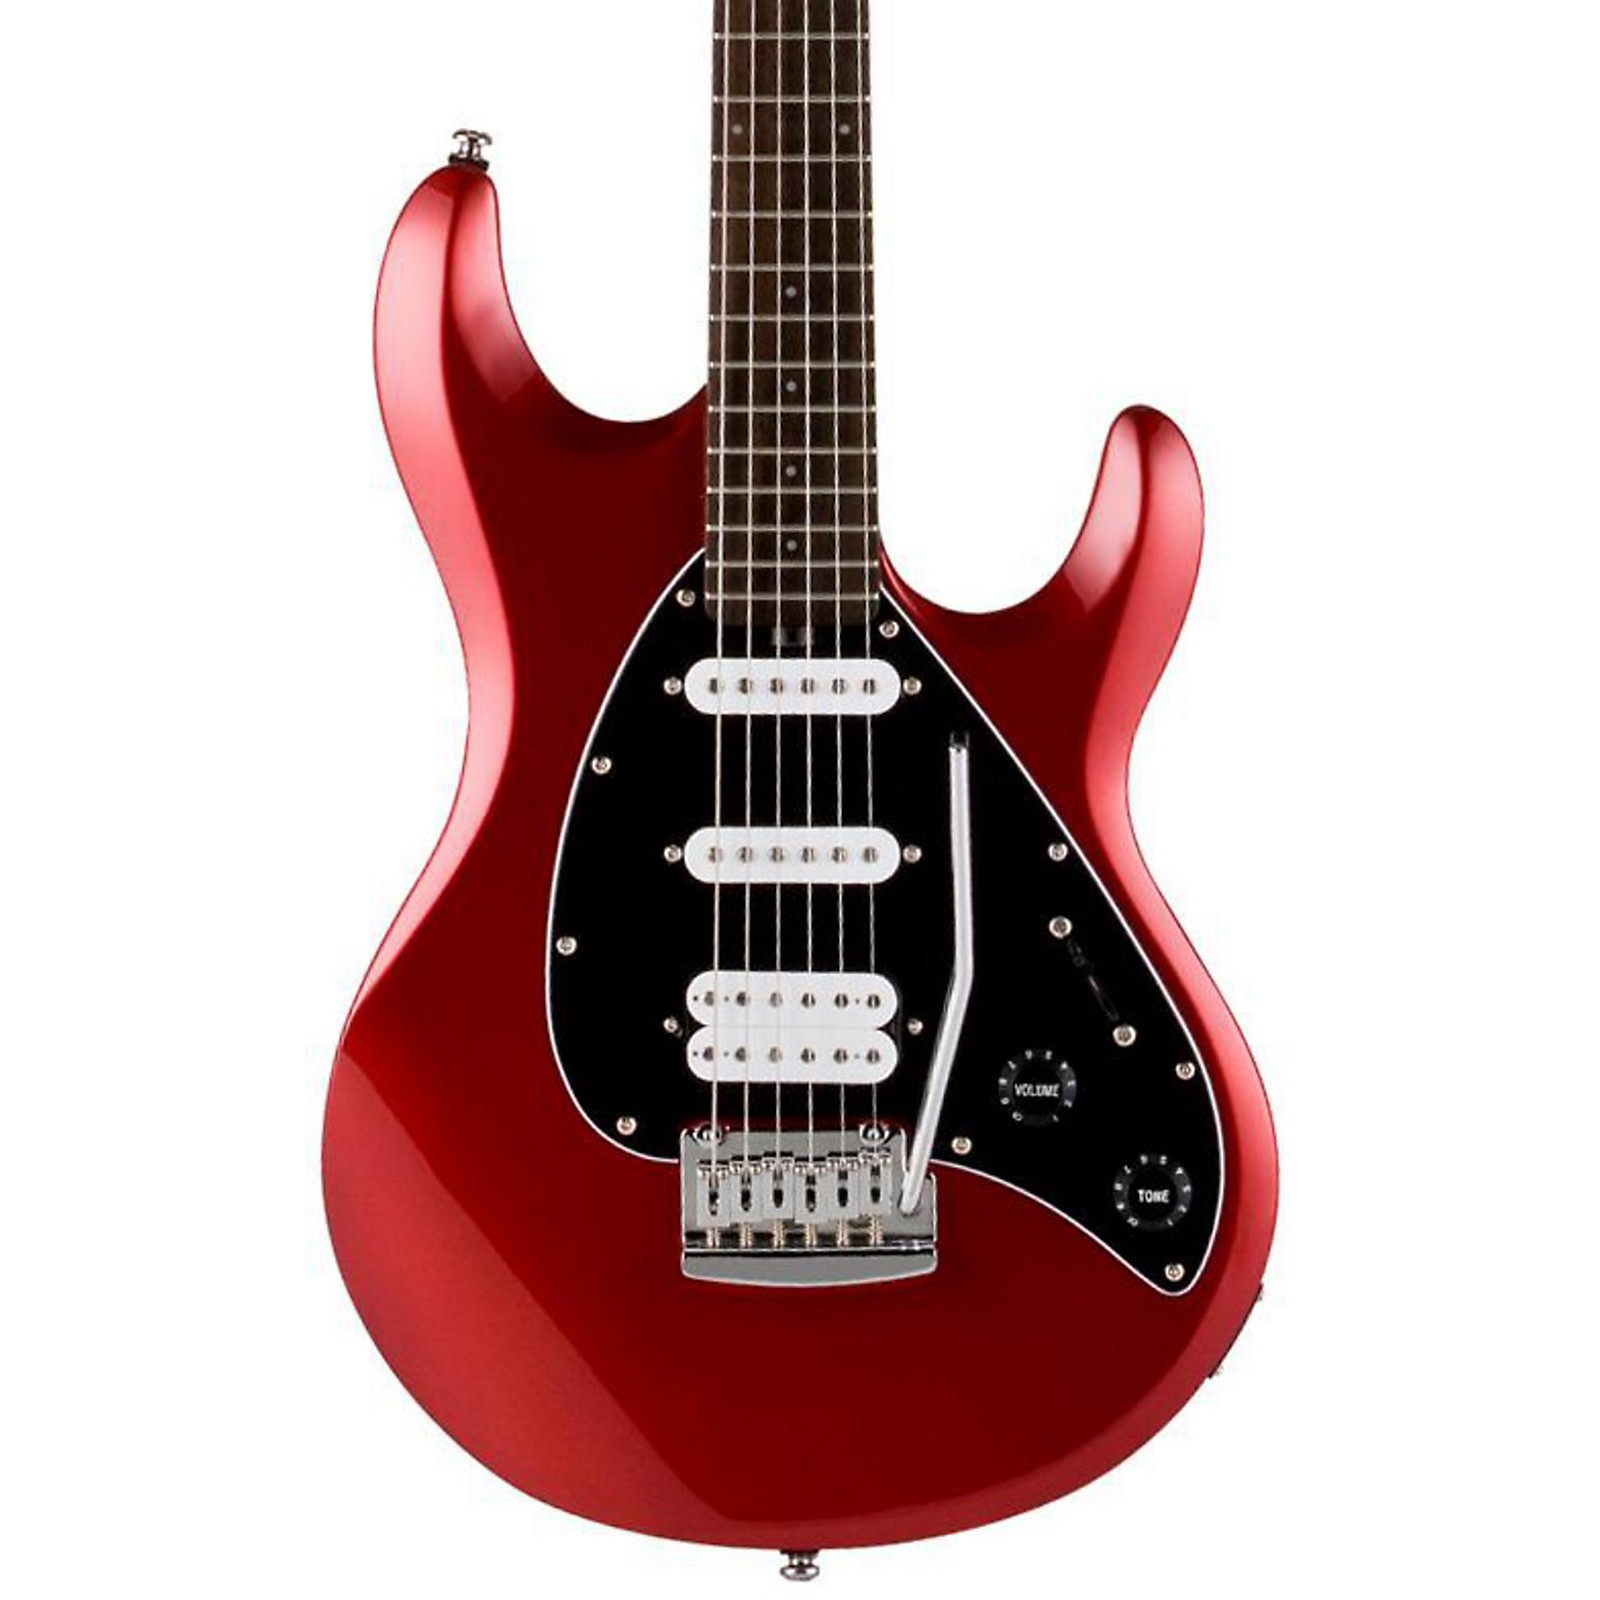 Sterling by Music Man Metallic Red | Guitar Center